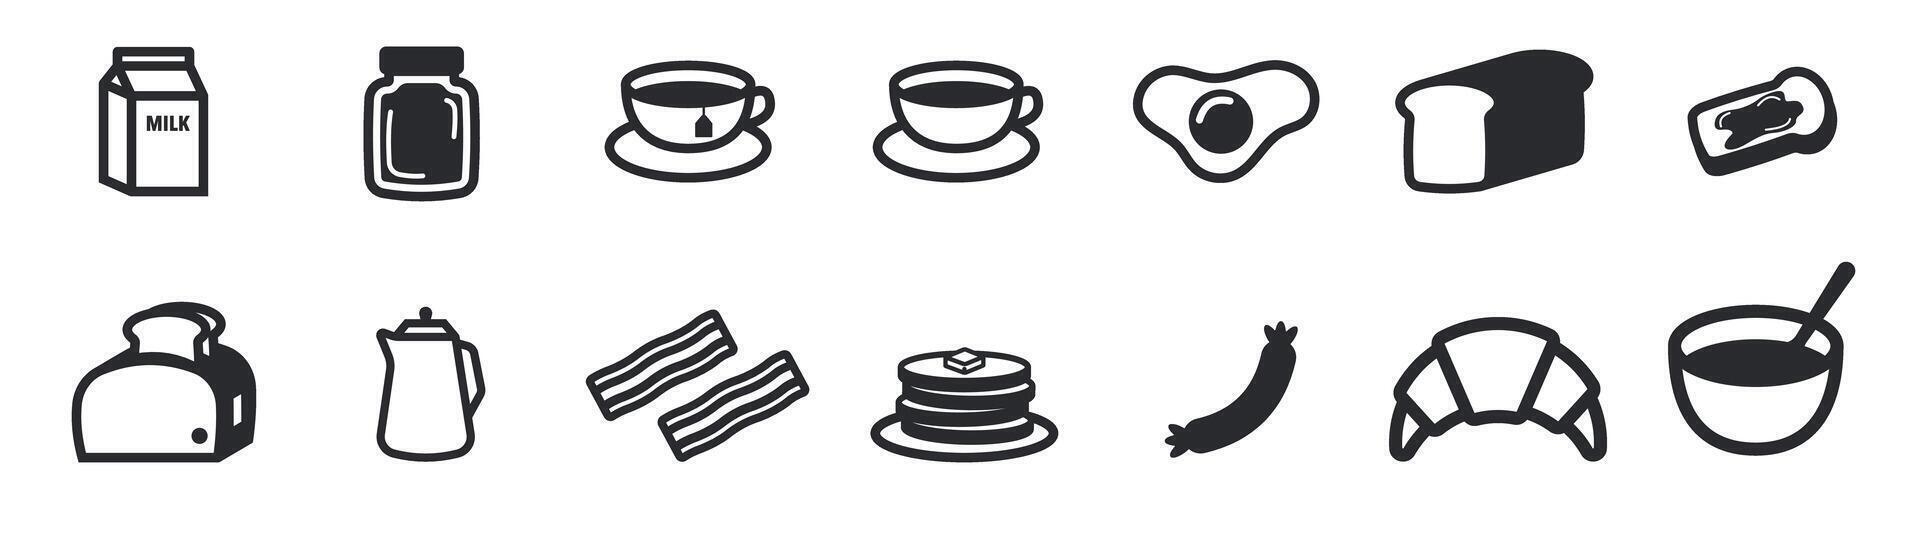 desayuno icono conjunto manojo, comer, un pan mermelada té y café diario rutina, Mañana comida vector